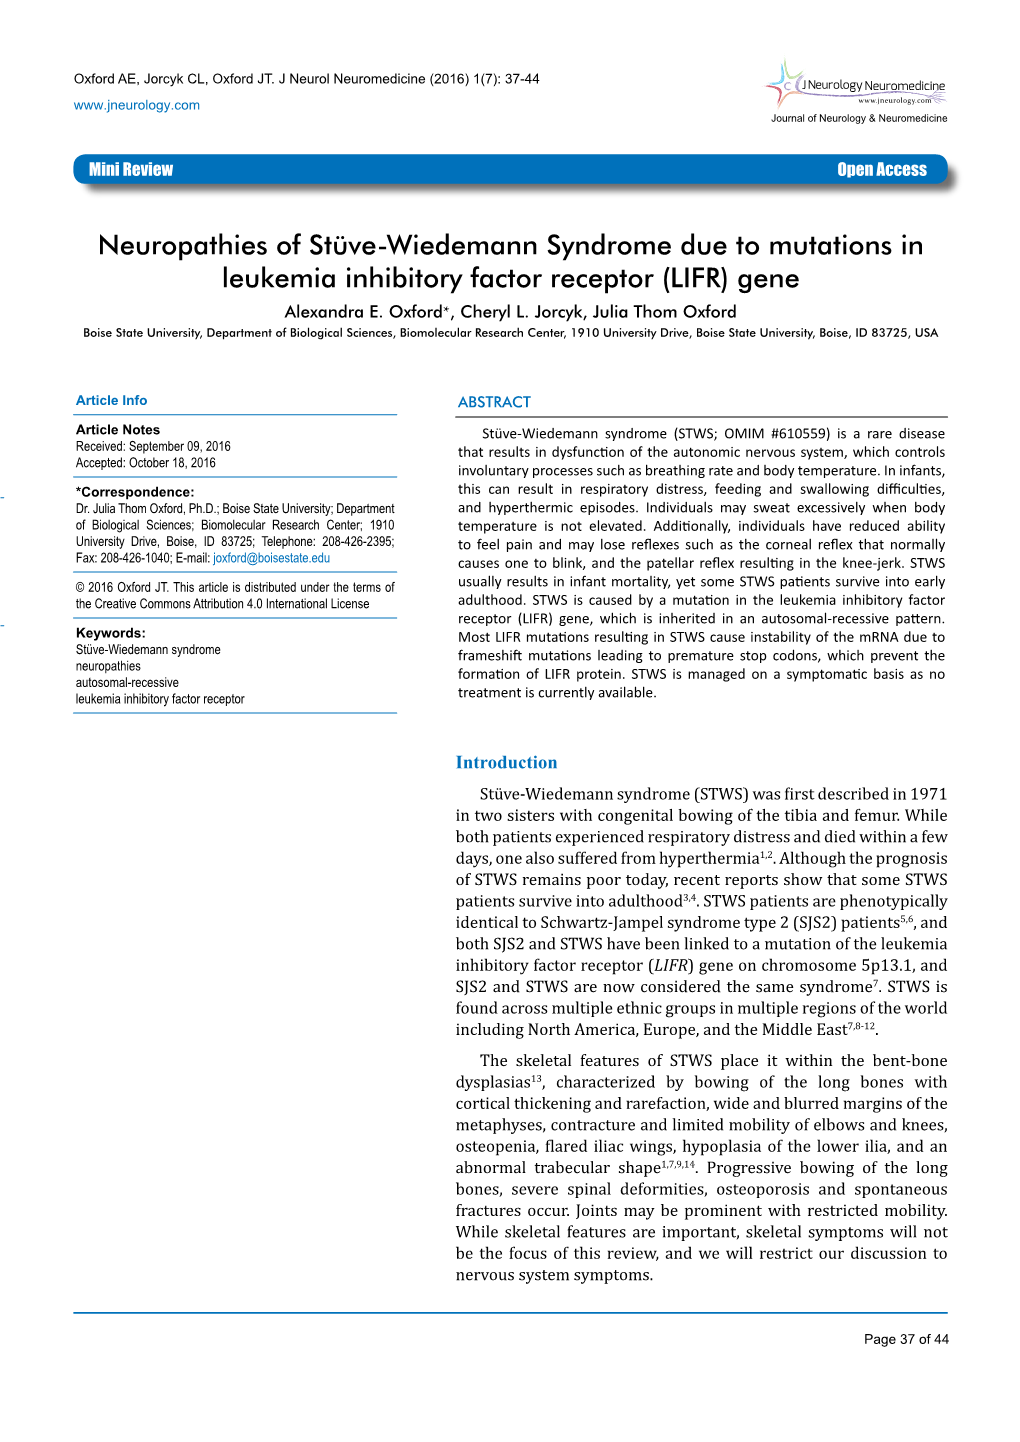 Neuropathies of Stüve-Wiedemann Syndrome Due to Mutations in Leukemia Inhibitory Factor Receptor (LIFR) Gene Alexandra E